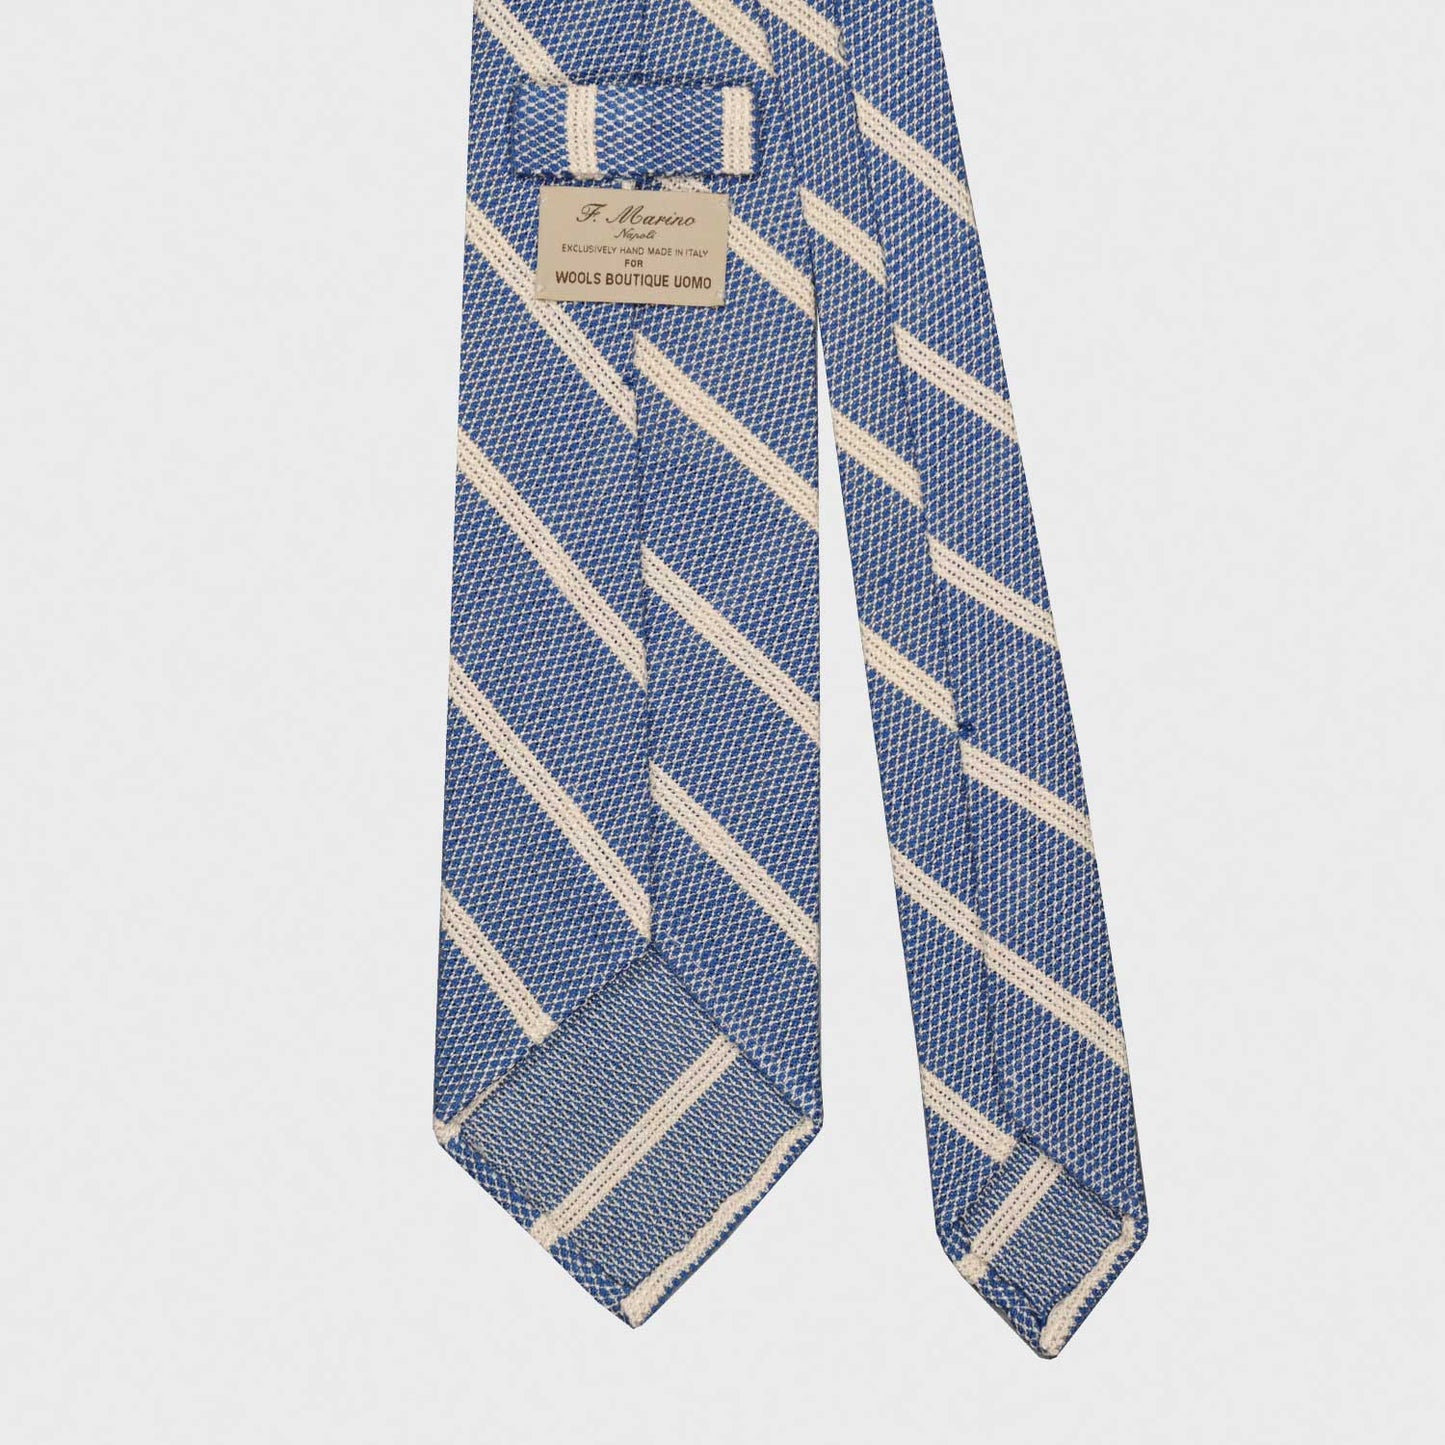 F.Marino Gauze Grenadine Silk Tie Regimental 3 Folds Denim Blue-Wools Boutique Uomo